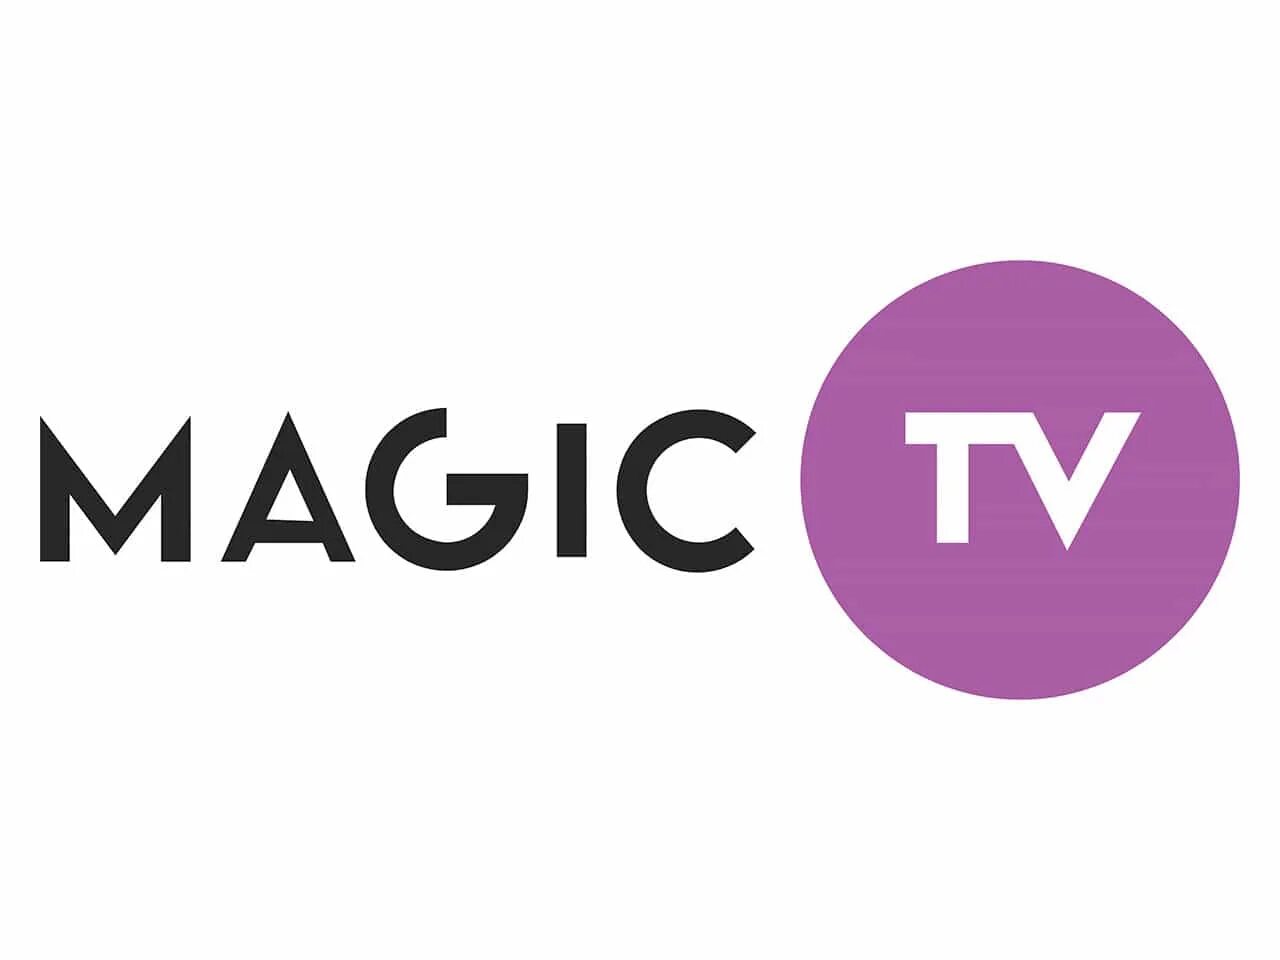 Магия тв. Magic TV. Логотипы каналов Магик. Логотип телеканалов Болгарии. Логотип болгарского телеканала.